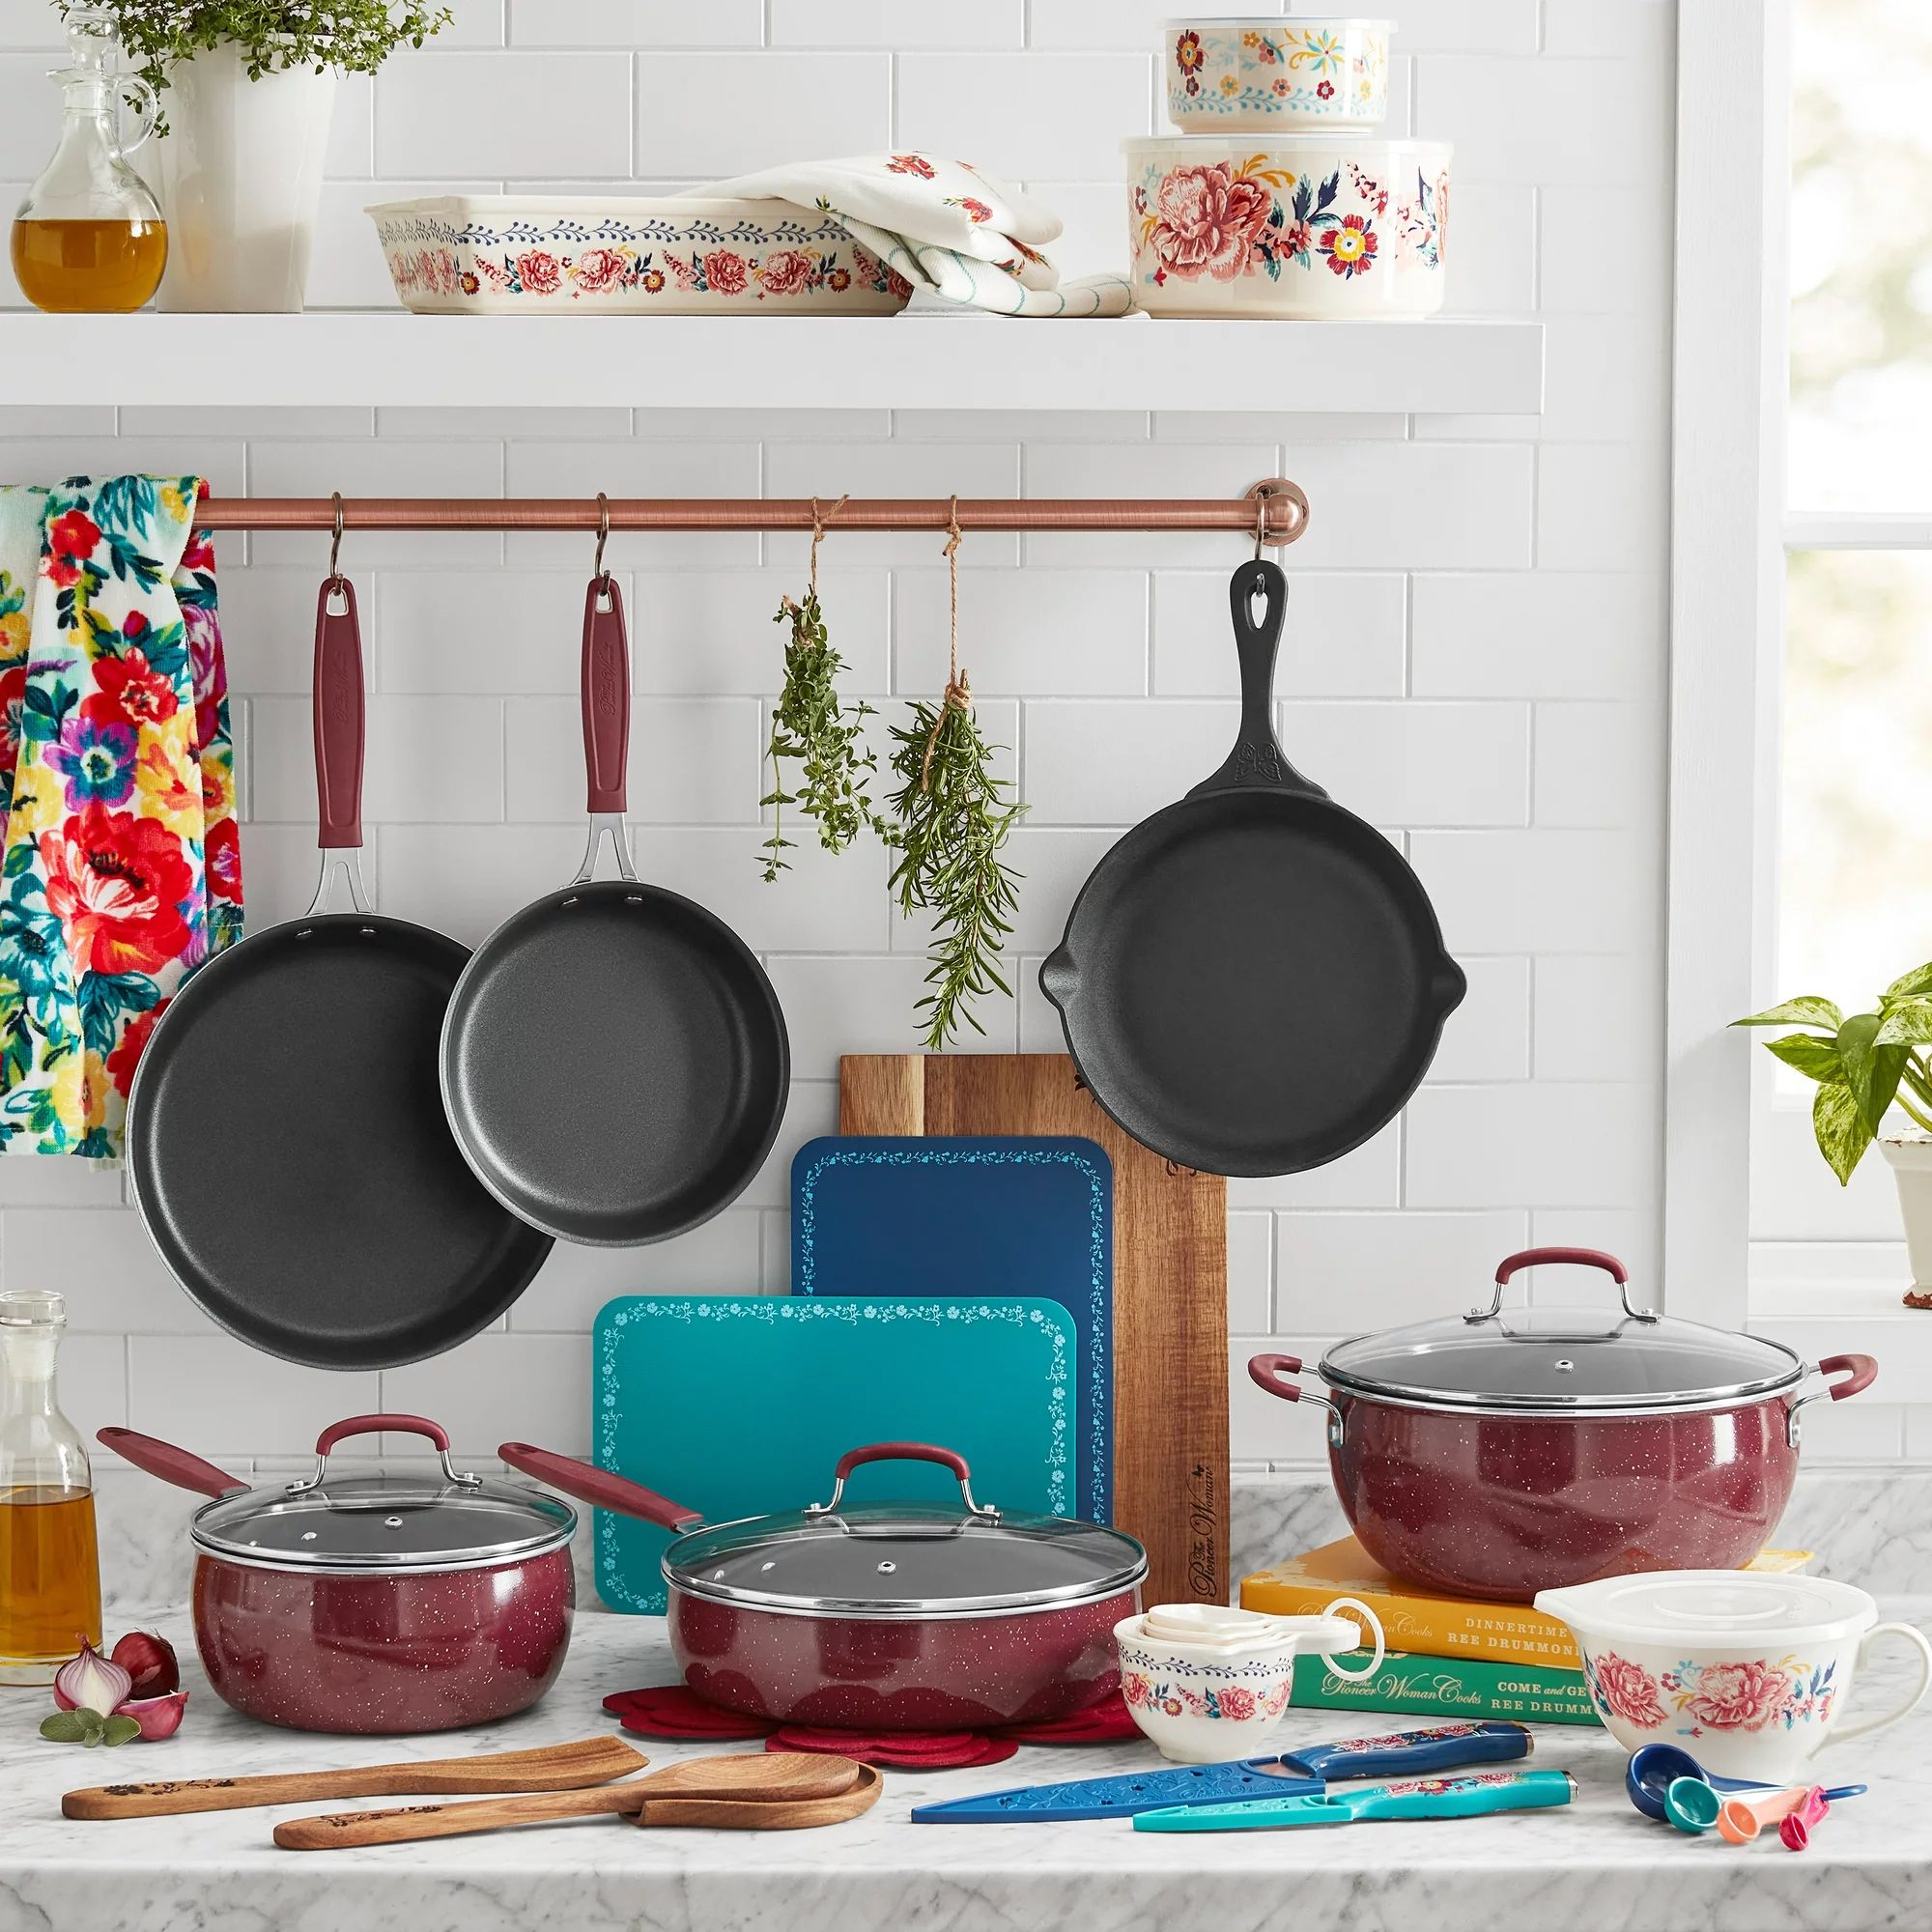 Pioneer Woman Kitchen Appliances from $25.88 on Walmart.com